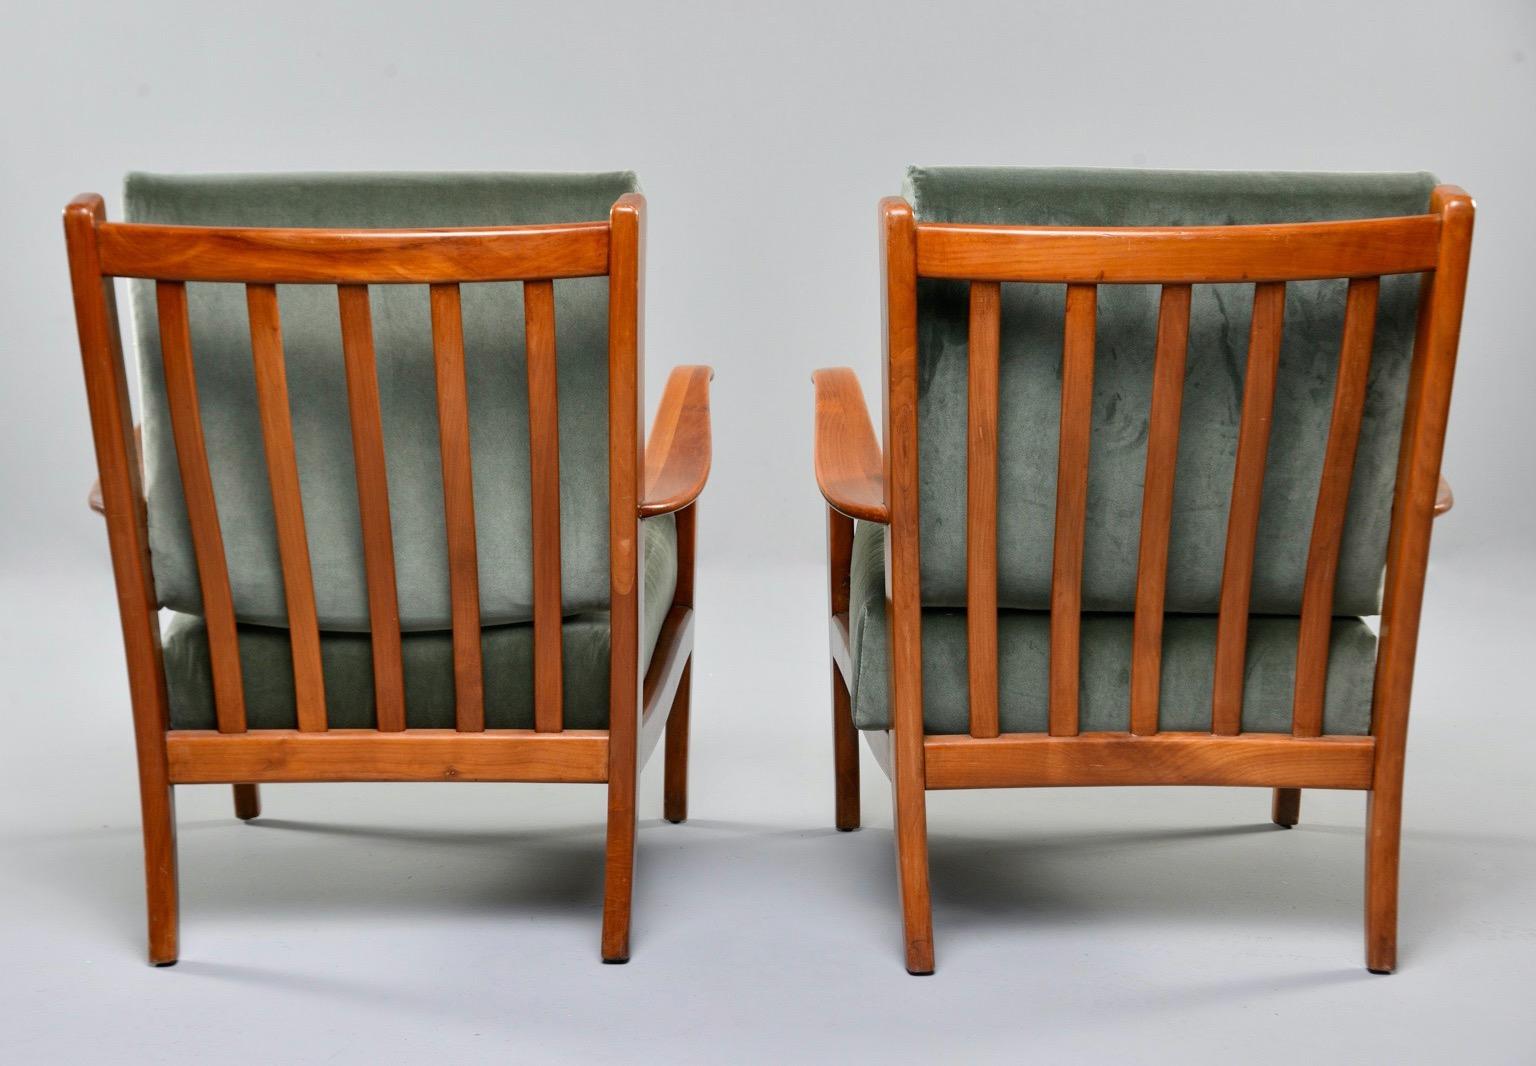 Upholstery Pair of Midcentury Italian Cherrywood Chairs with Green Velvetc